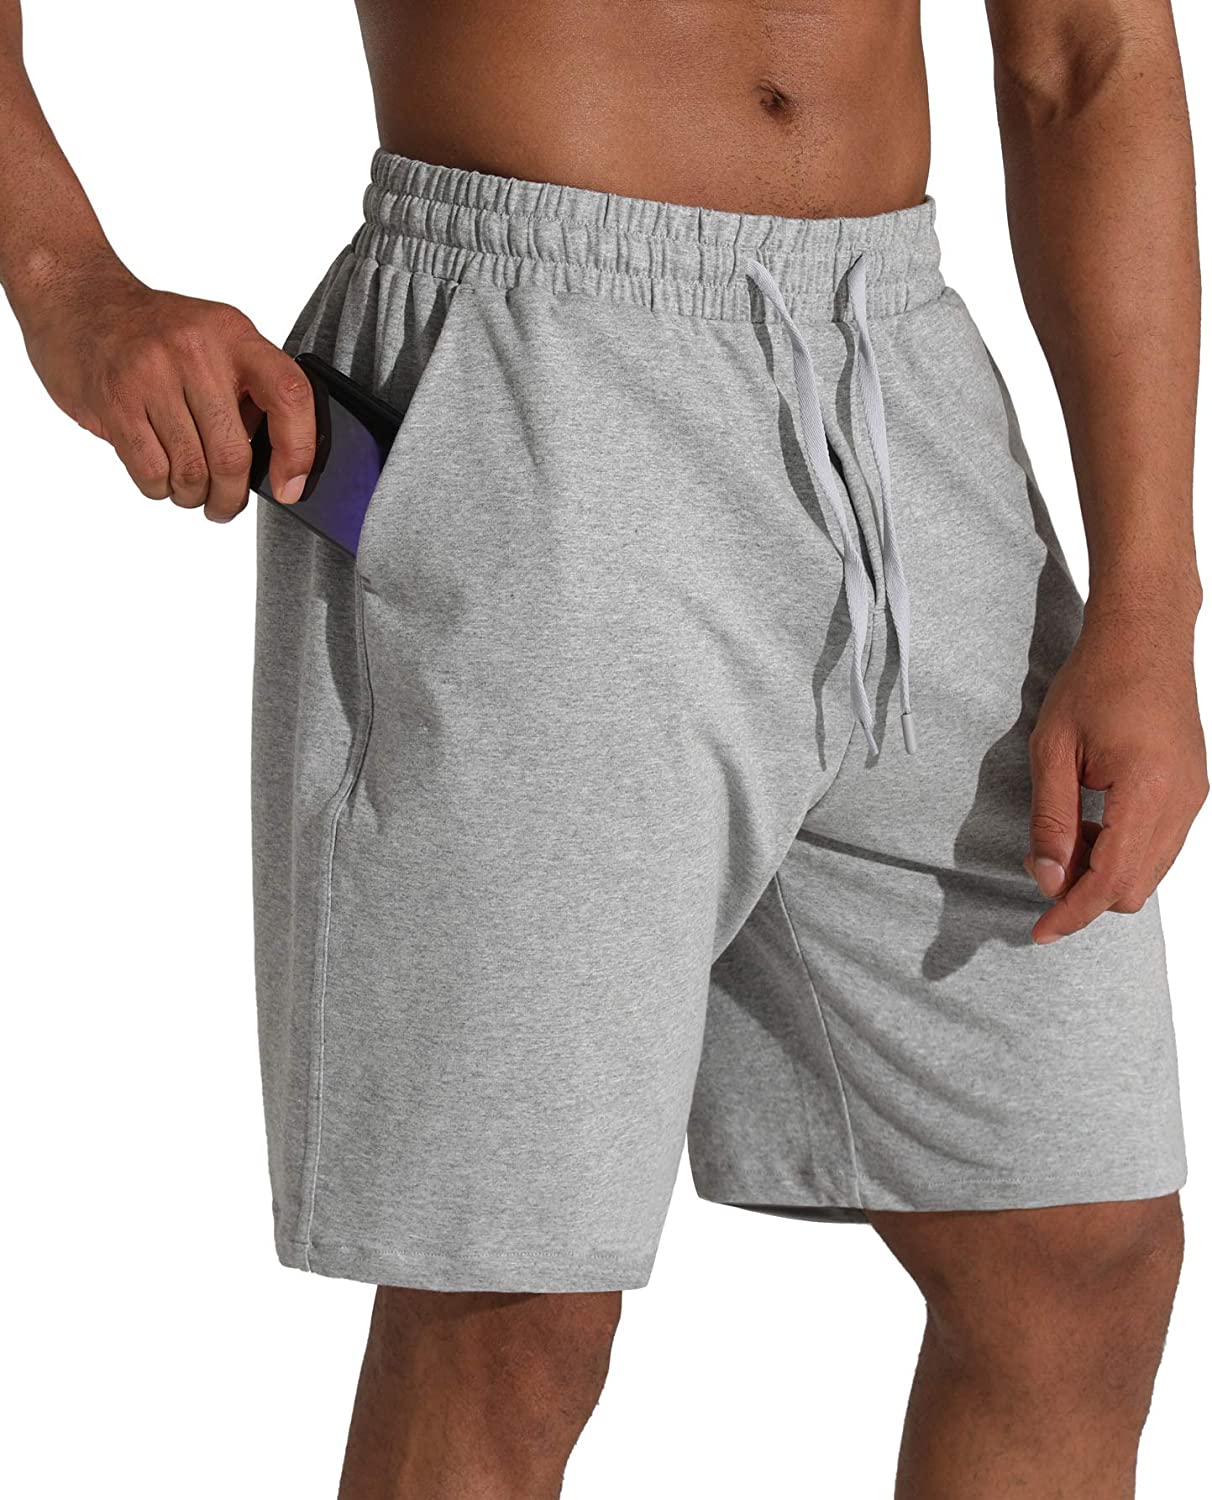 Hanes Men's Originals Cotton Pockets, Pull-On Jersey Gym Shorts, 7